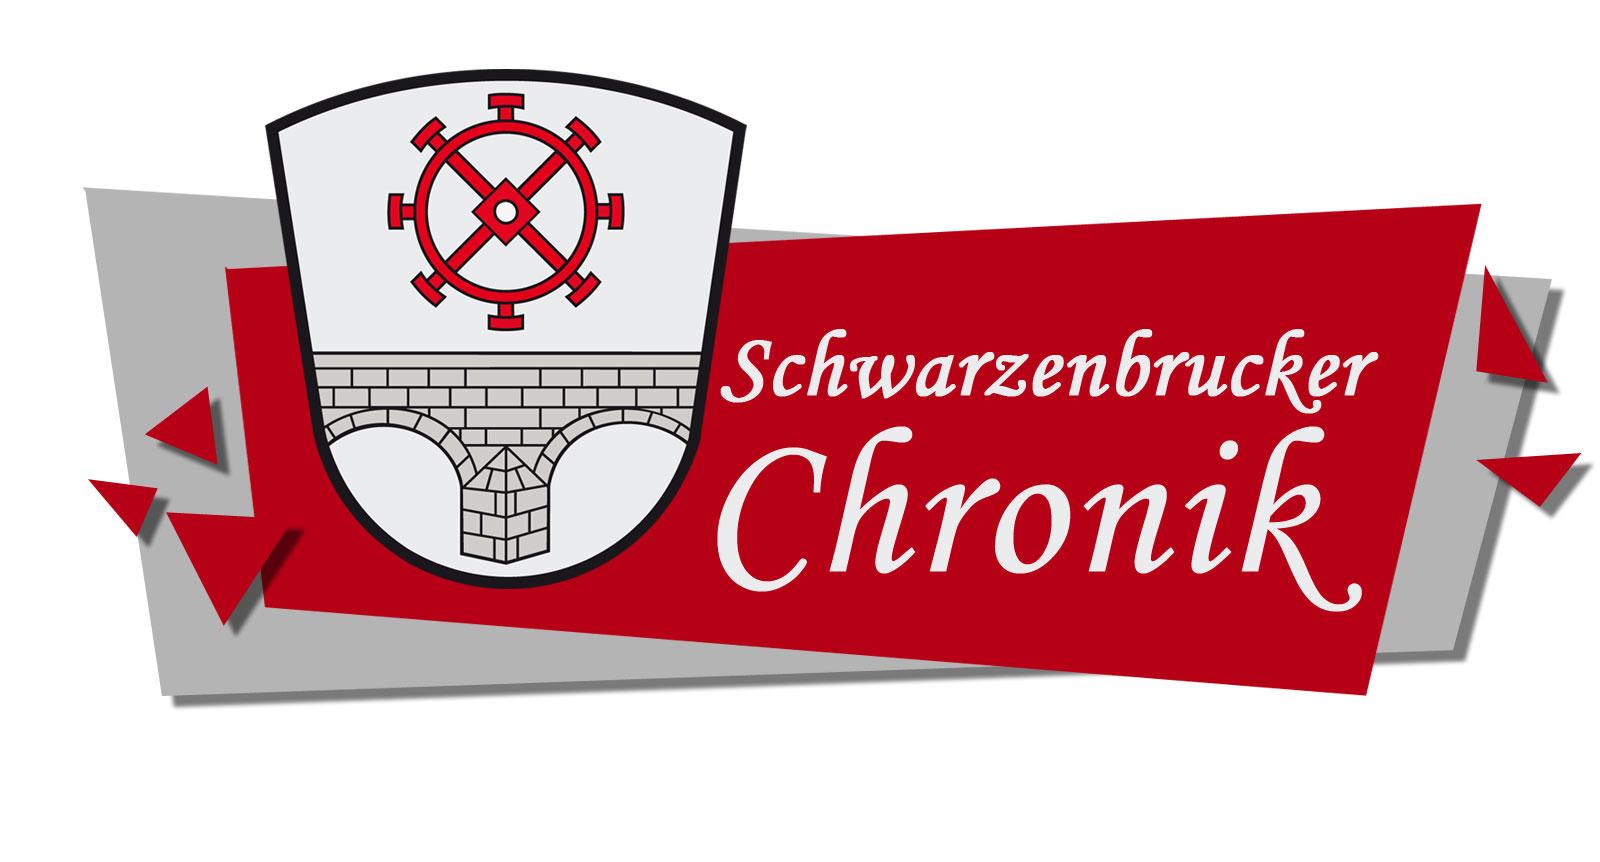 Schwarzenbrucker Chronik